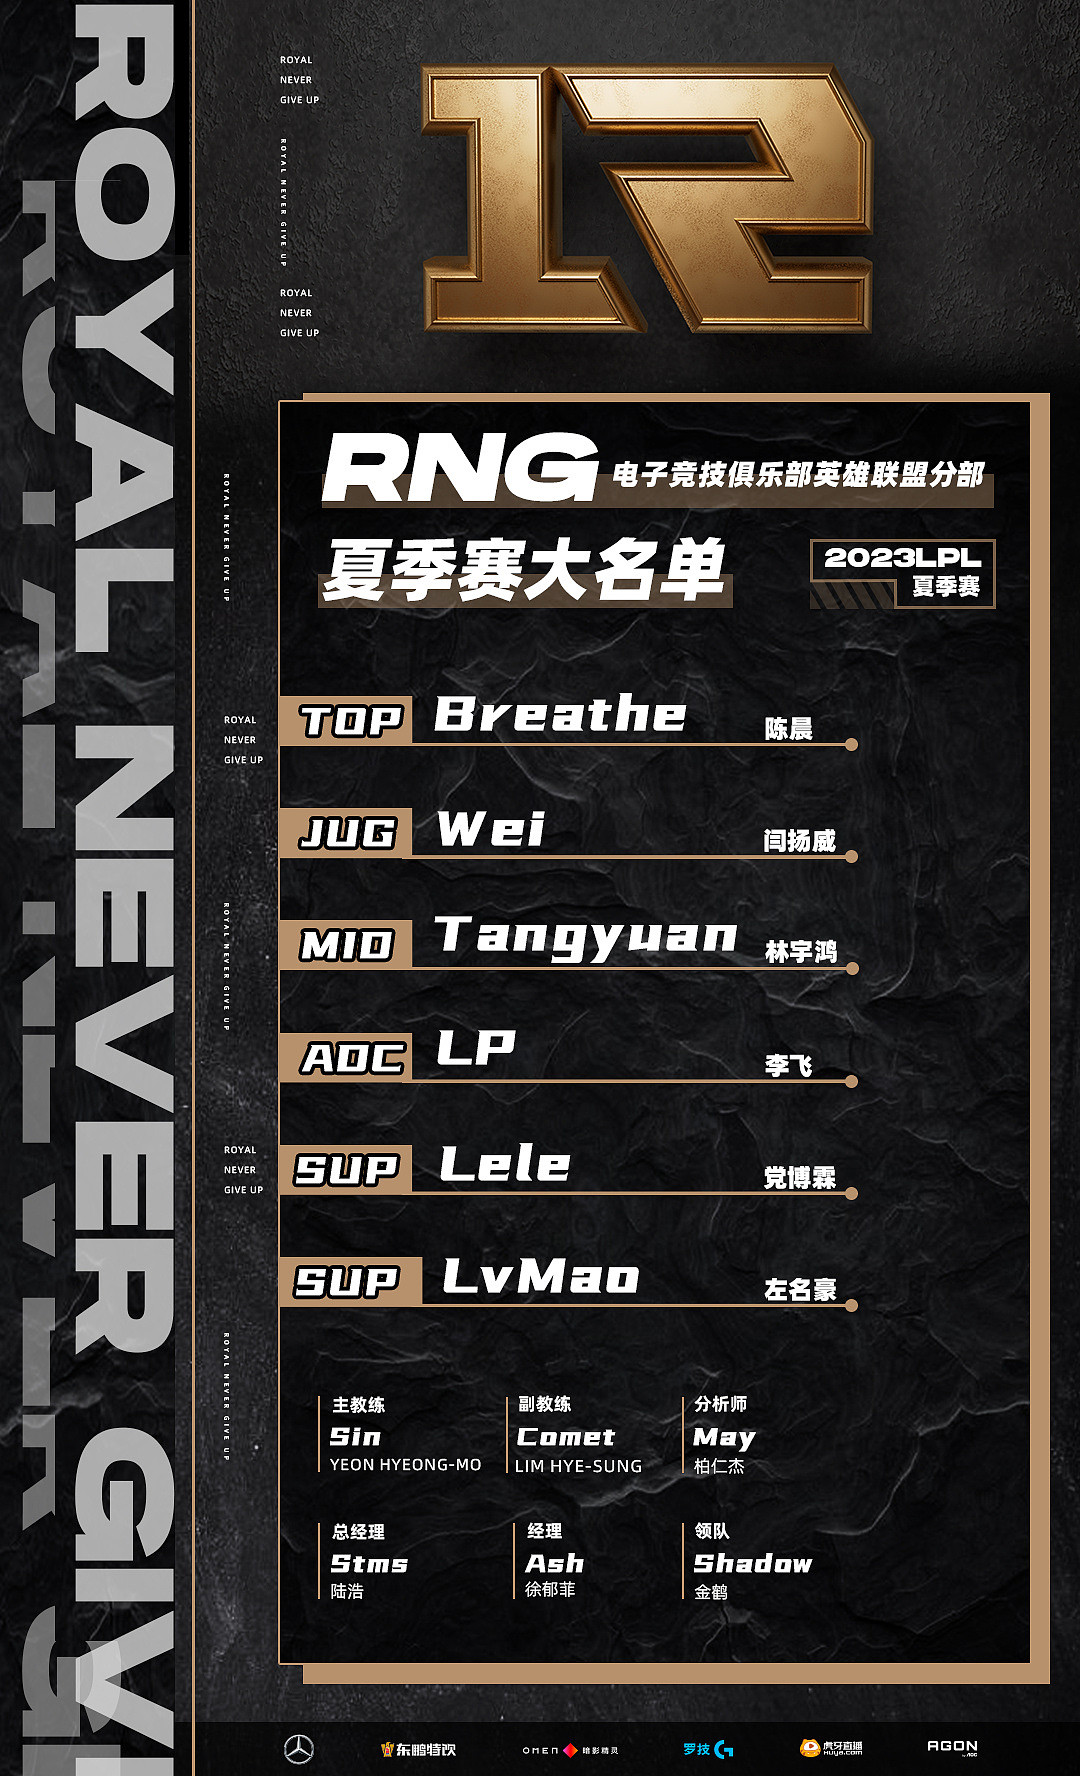 RNG夏季赛大名单：呼吸、Wei、汤圆留队 Lvmao、LP、Lele加盟 - 1